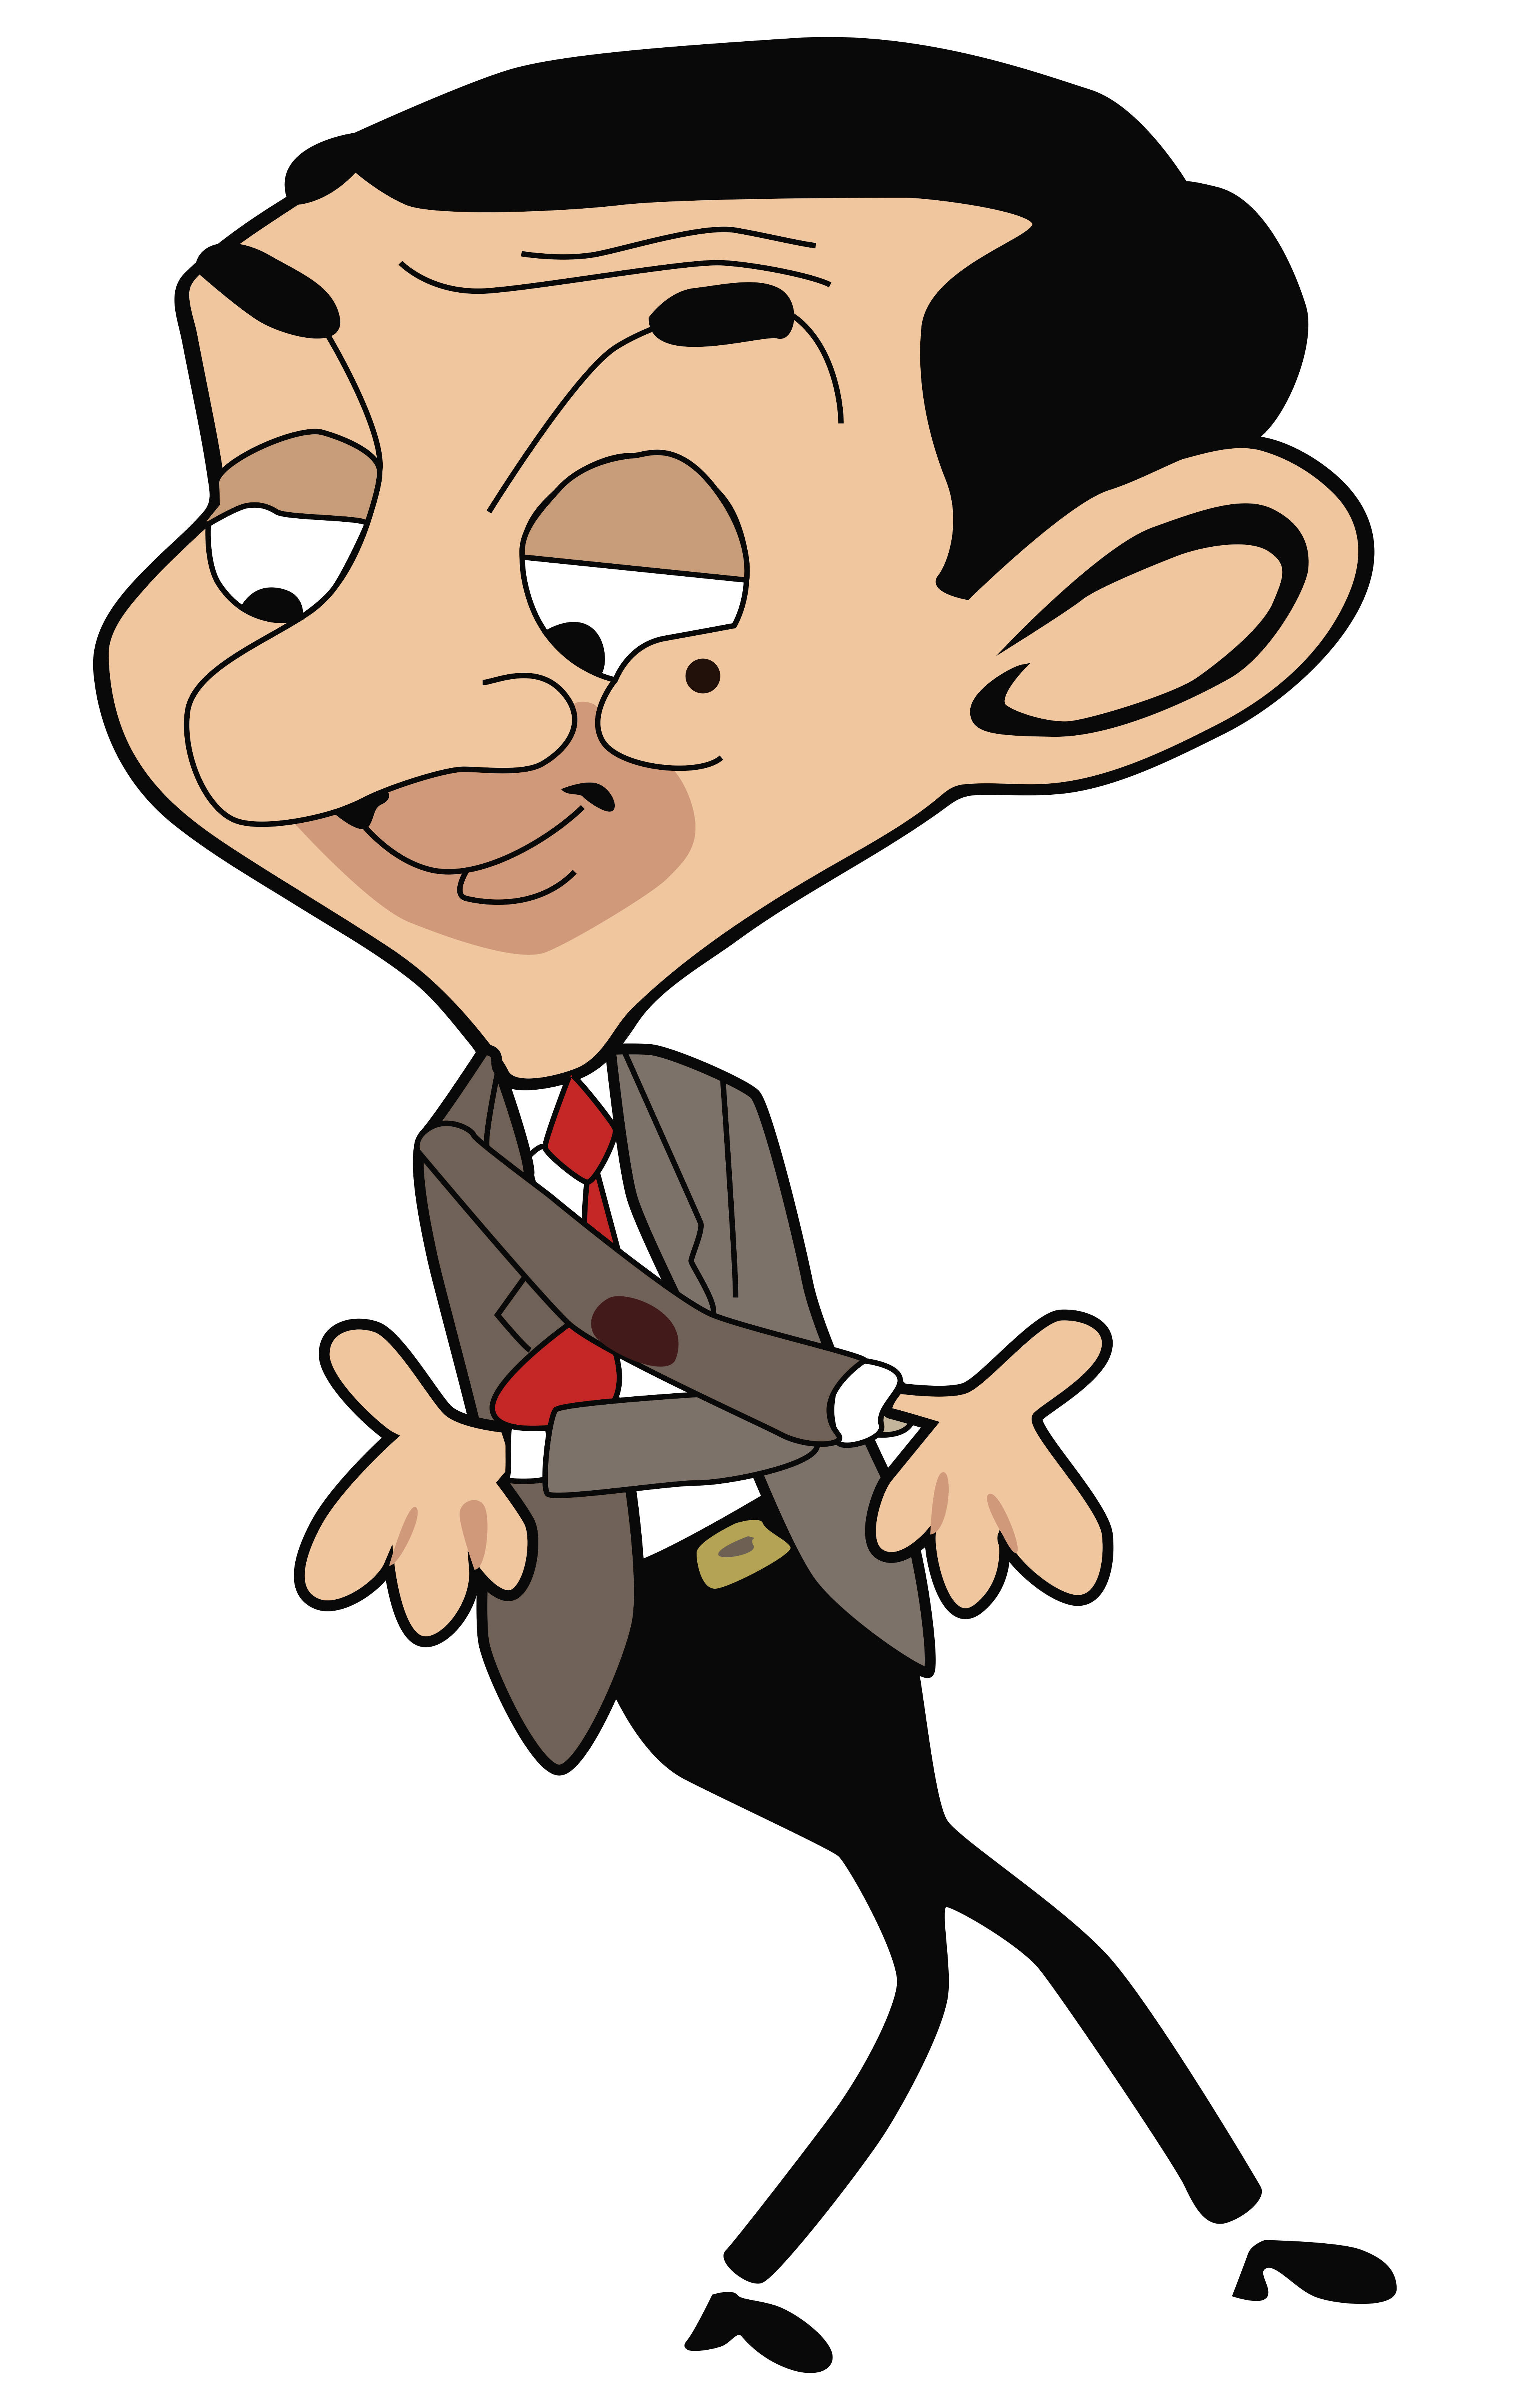 Free Mr Bean Cartoon Wallpaper Downloads, [100+] Mr Bean Cartoon Wallpapers  for FREE 